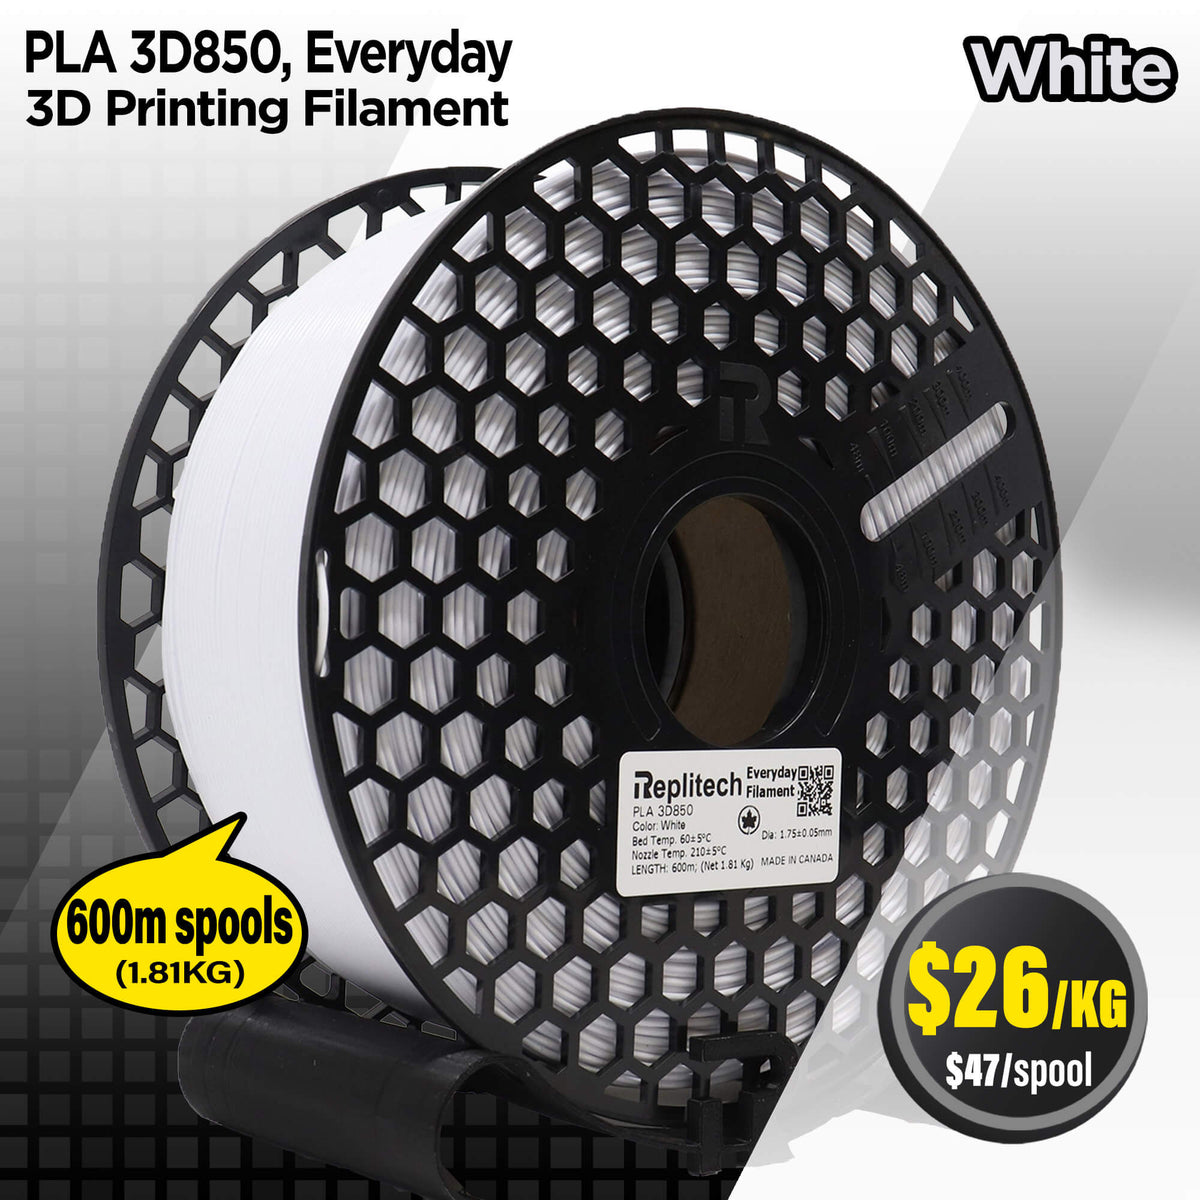 PLA 3D850 Everyday White